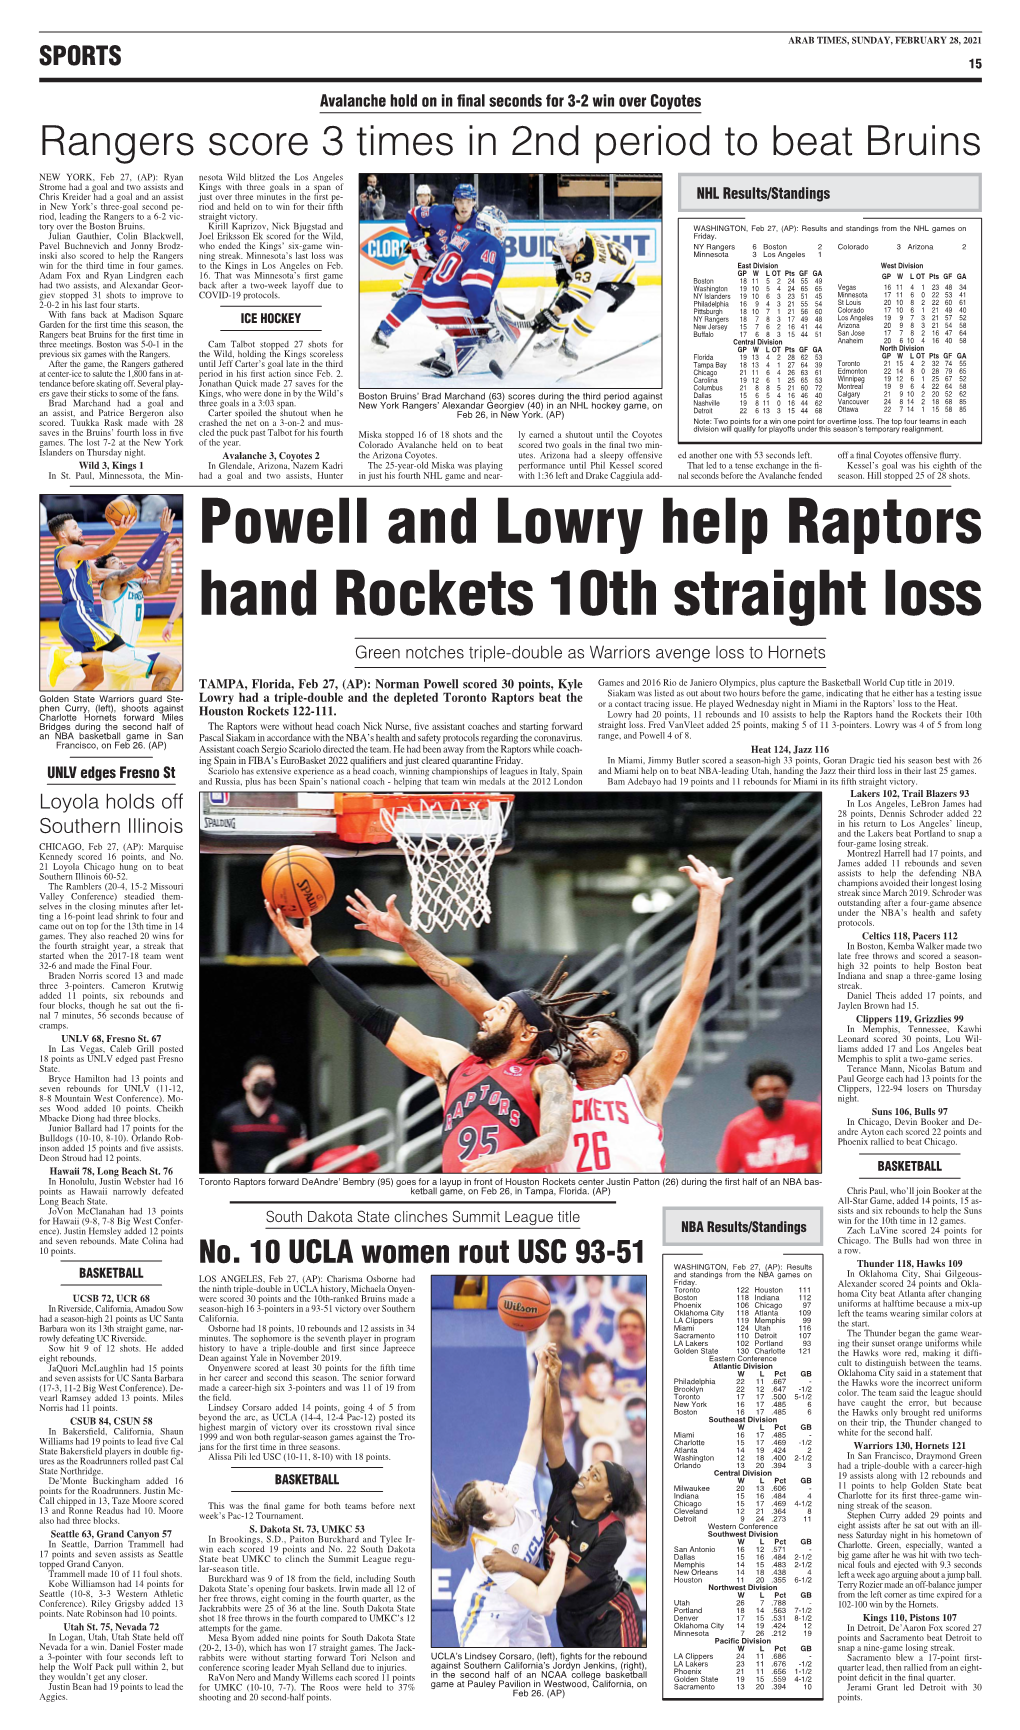 Powell and Lowry Help Raptors Hand Rockets 10Th Straight Loss